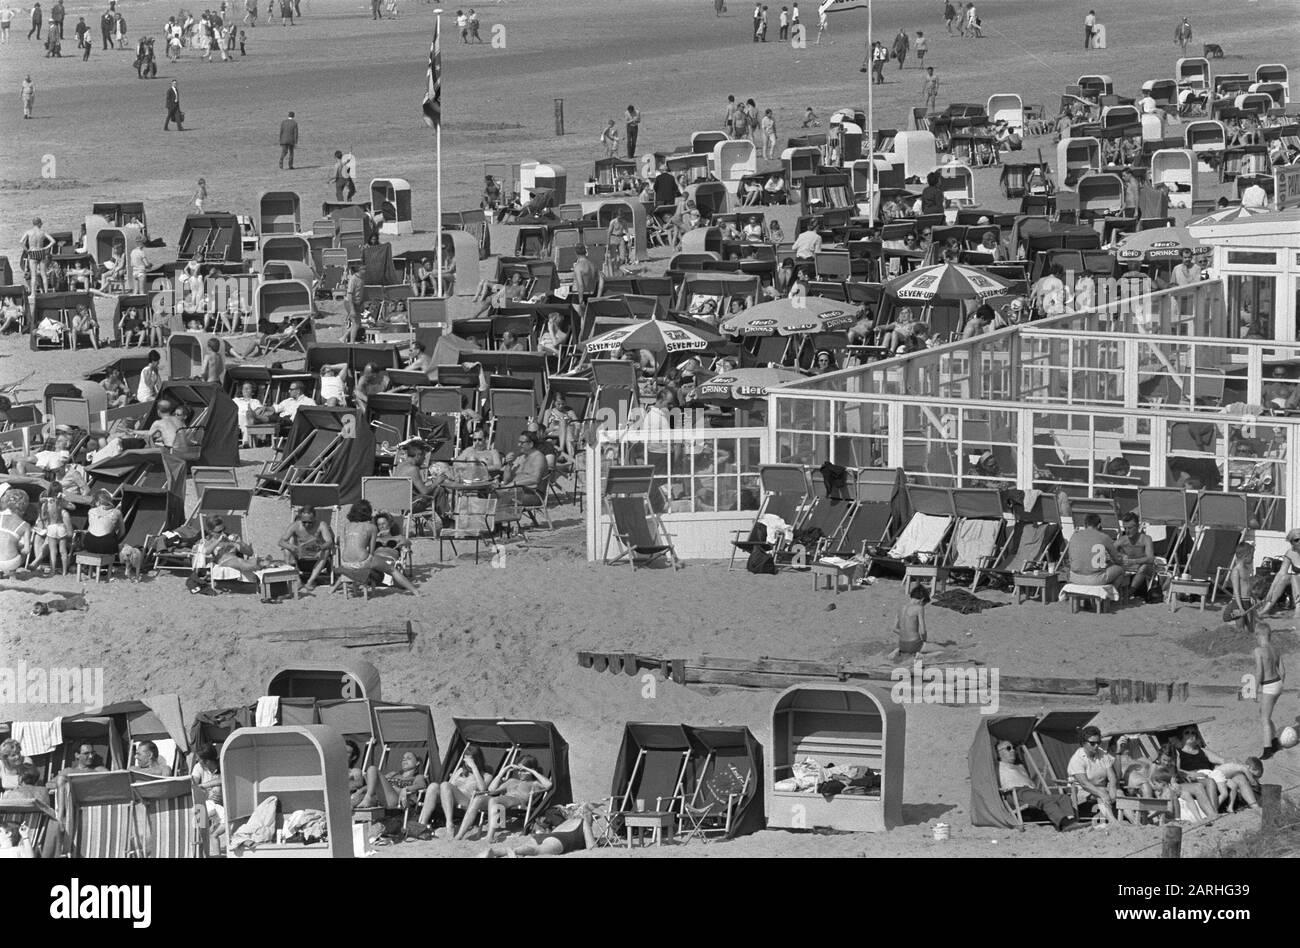 Sonnenanbeter am Strand Zandvoort Camping, Strand mit Stühlen Datum: 7.  april 1969 Ort: Noord-Holland, Zandvoort Schlüsselwörter: Campingplätze,  Strände Stockfotografie - Alamy